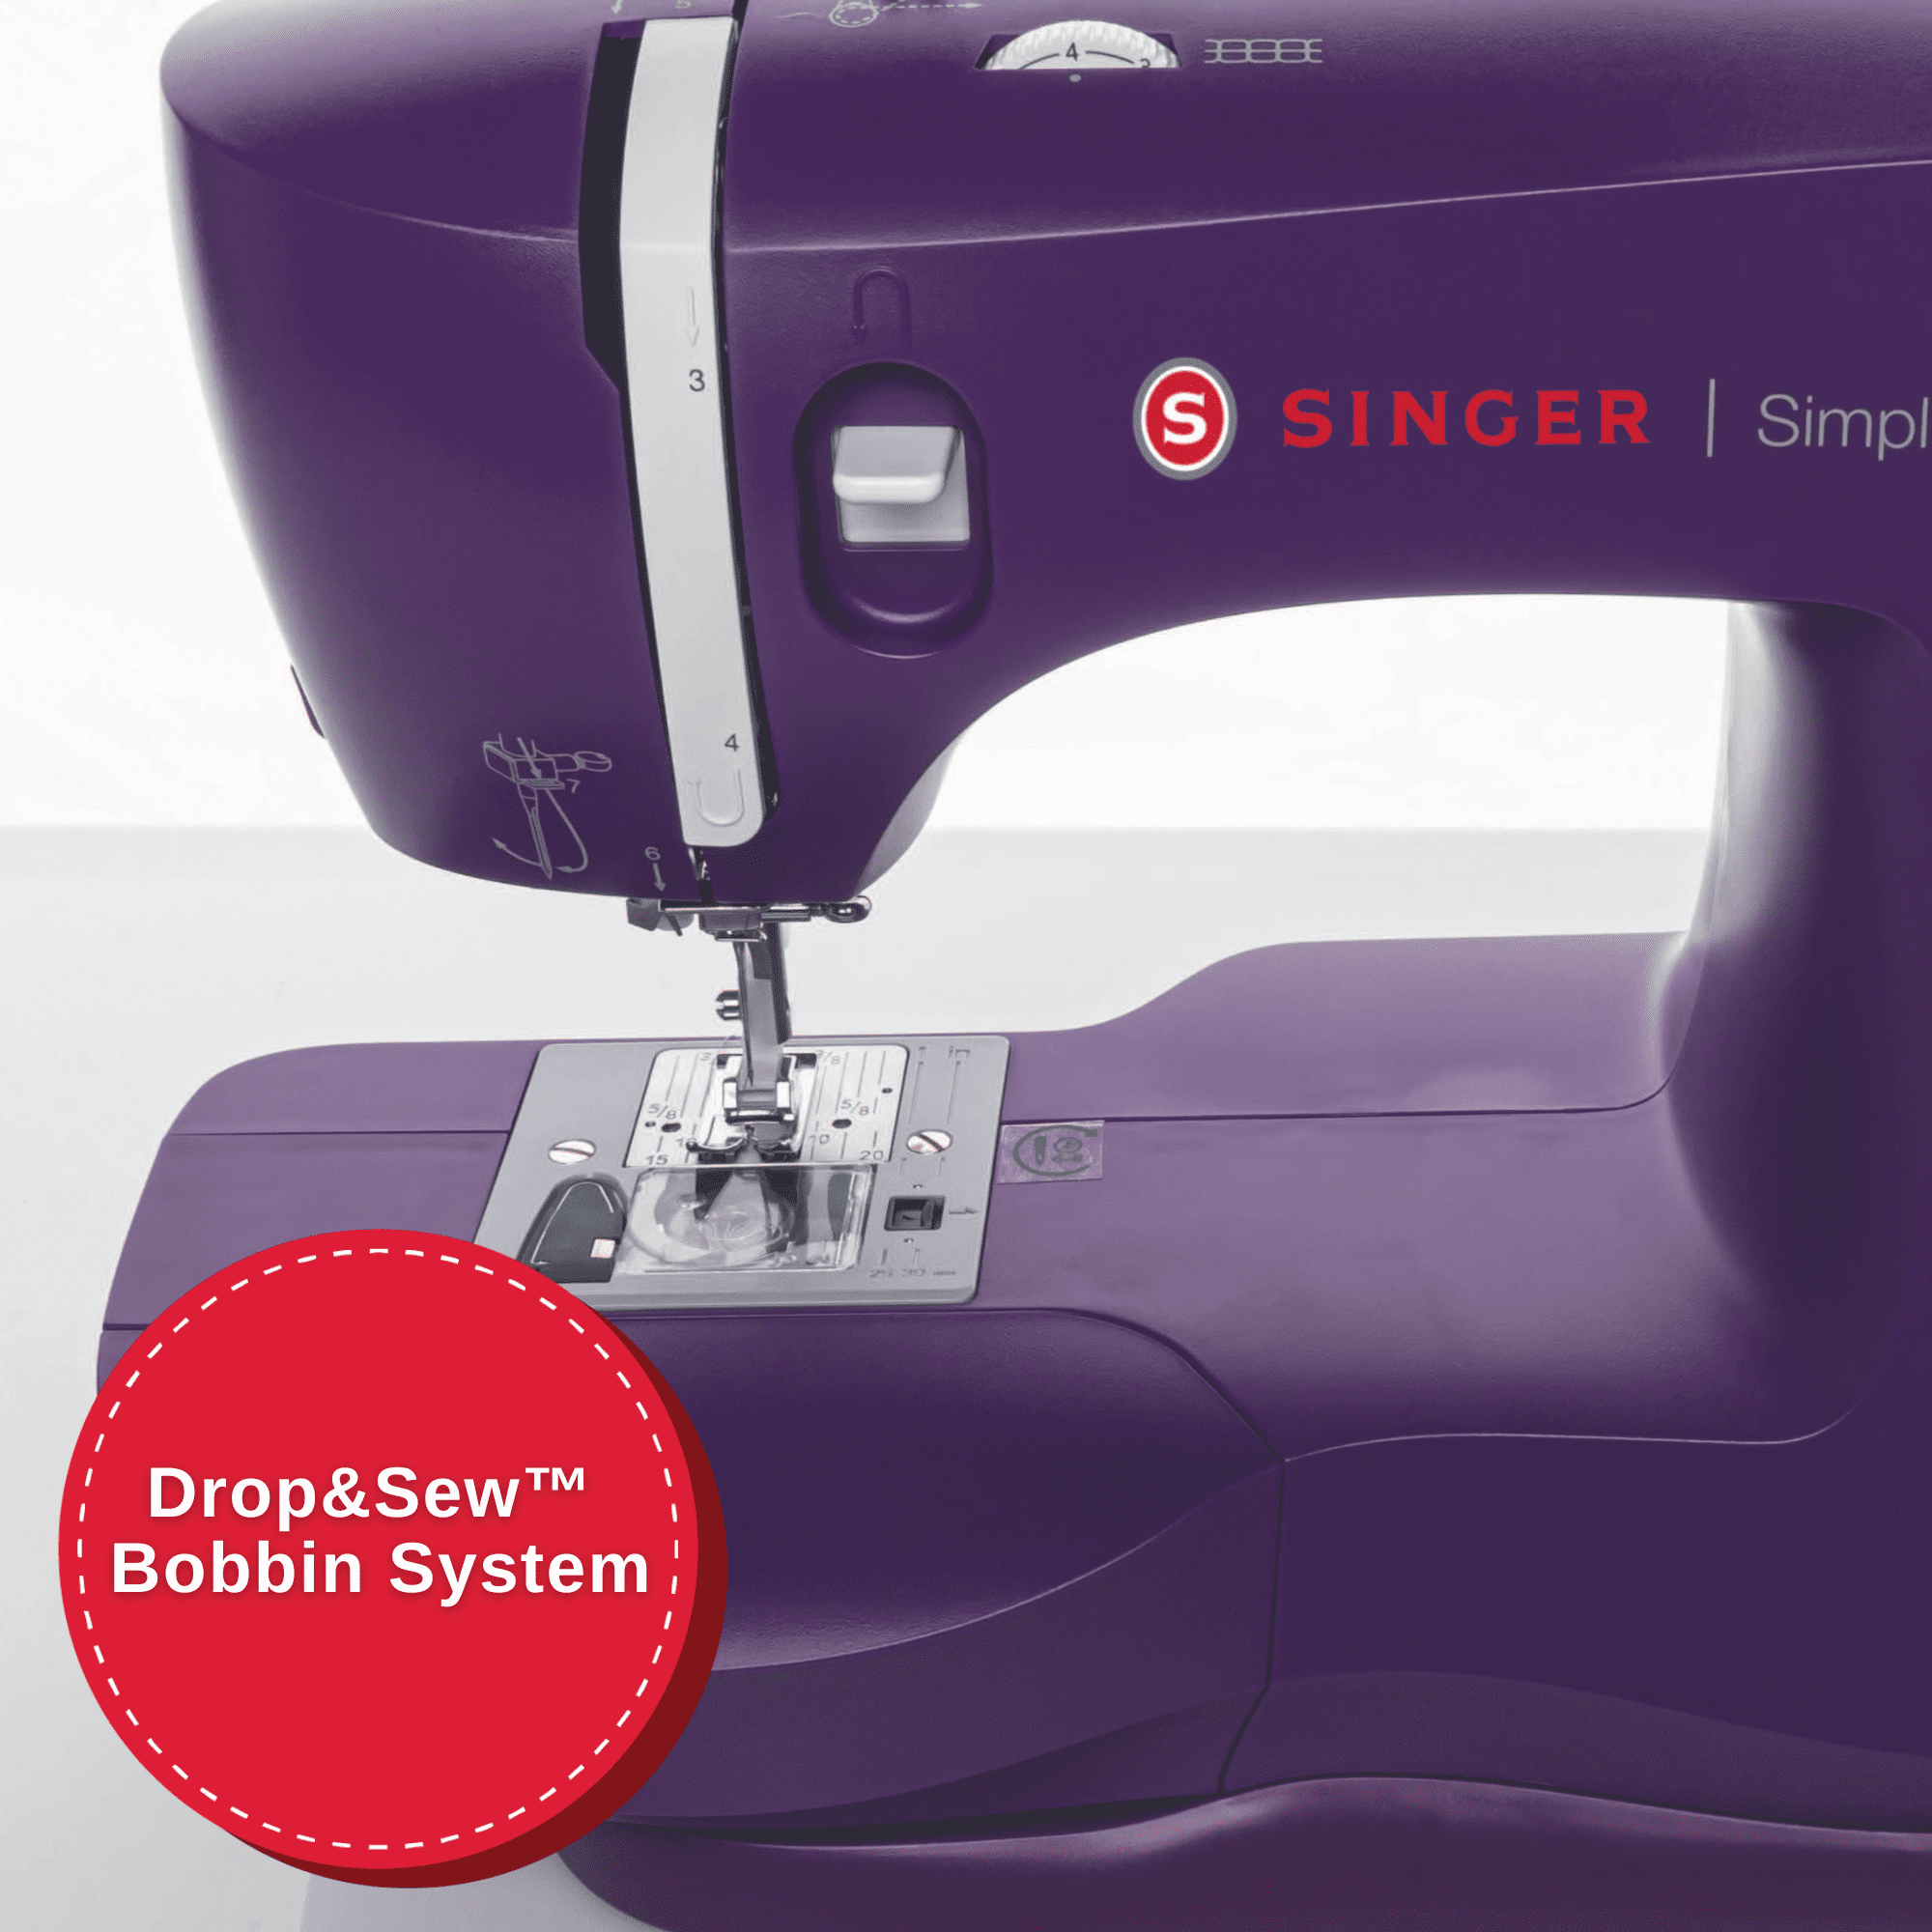 SINGER 3337 Purple Mechanical Sewing Machine